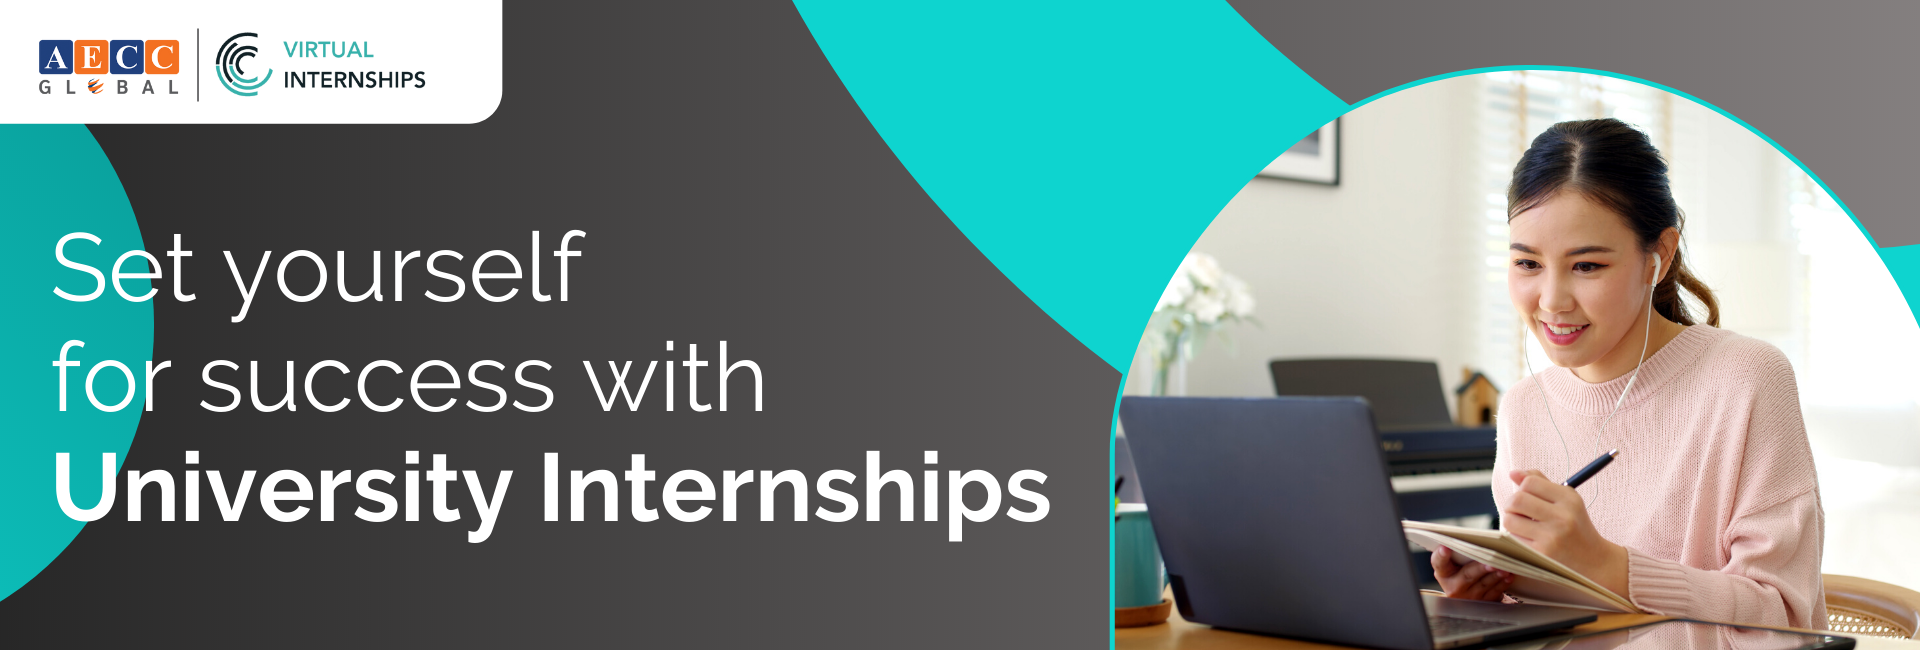 version-2---virtual-internships-banner Virtual Internships